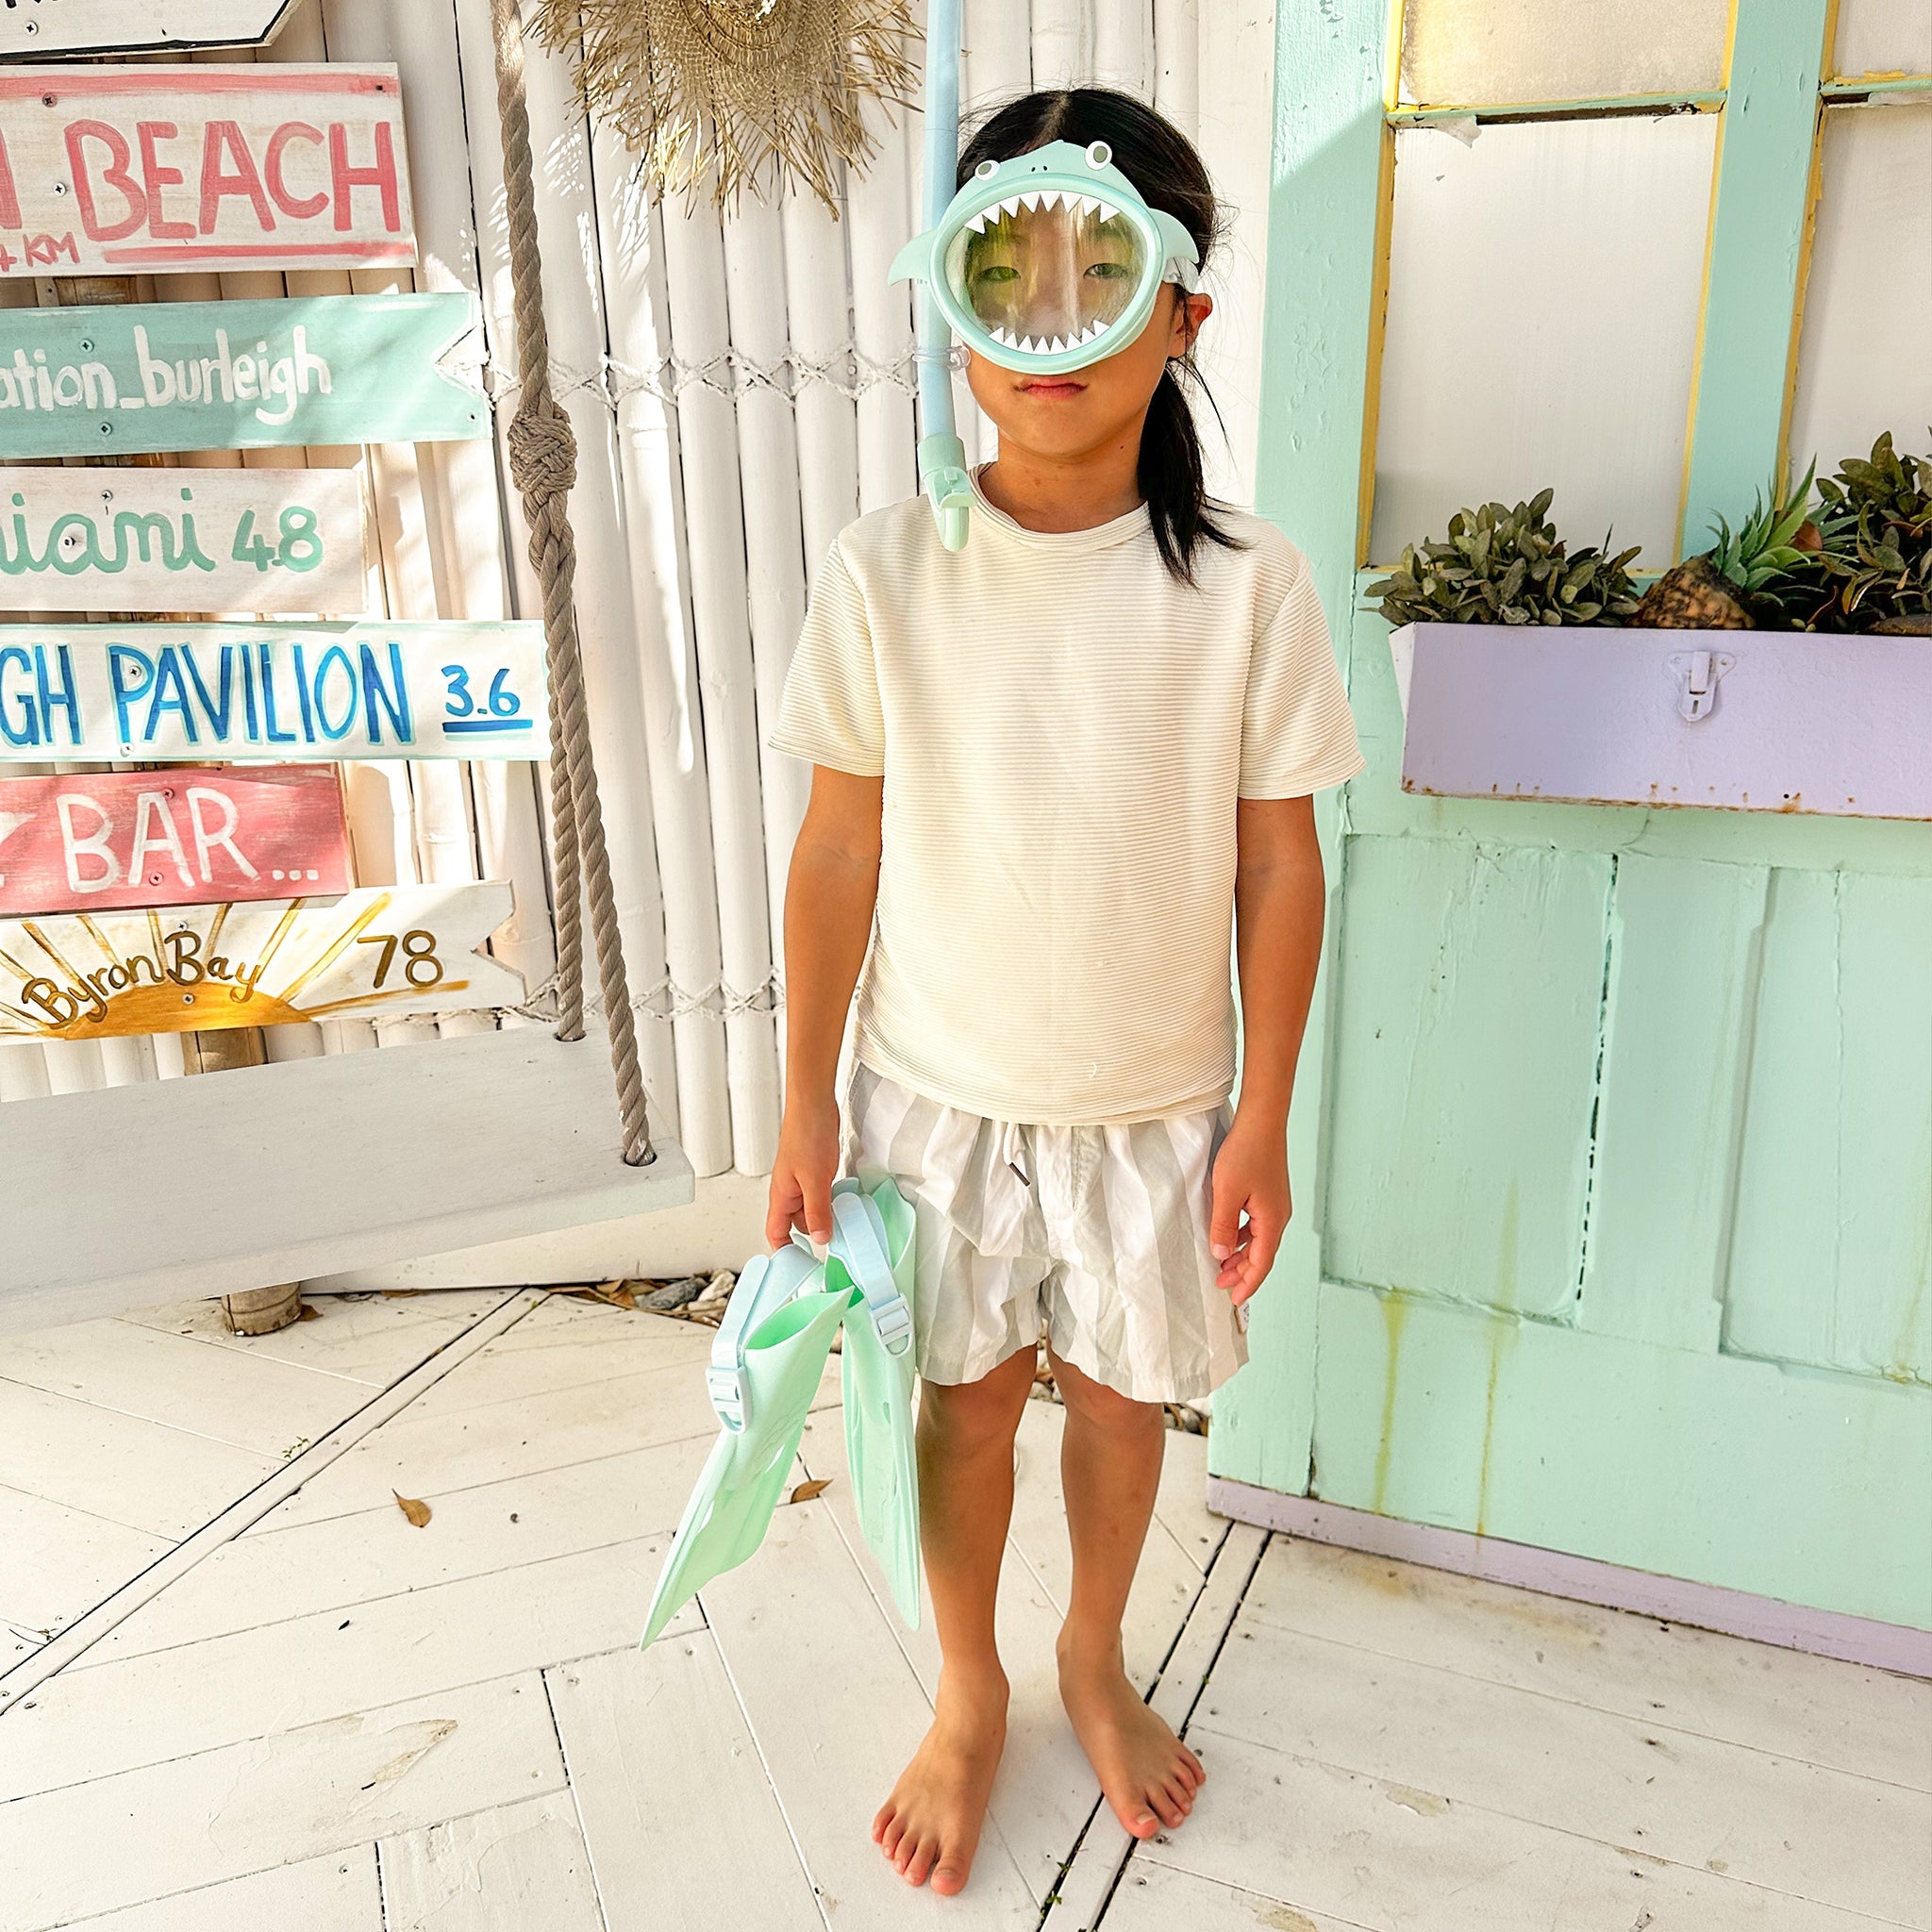 Kids Snorkel Set Small | Salty the Shark Multi